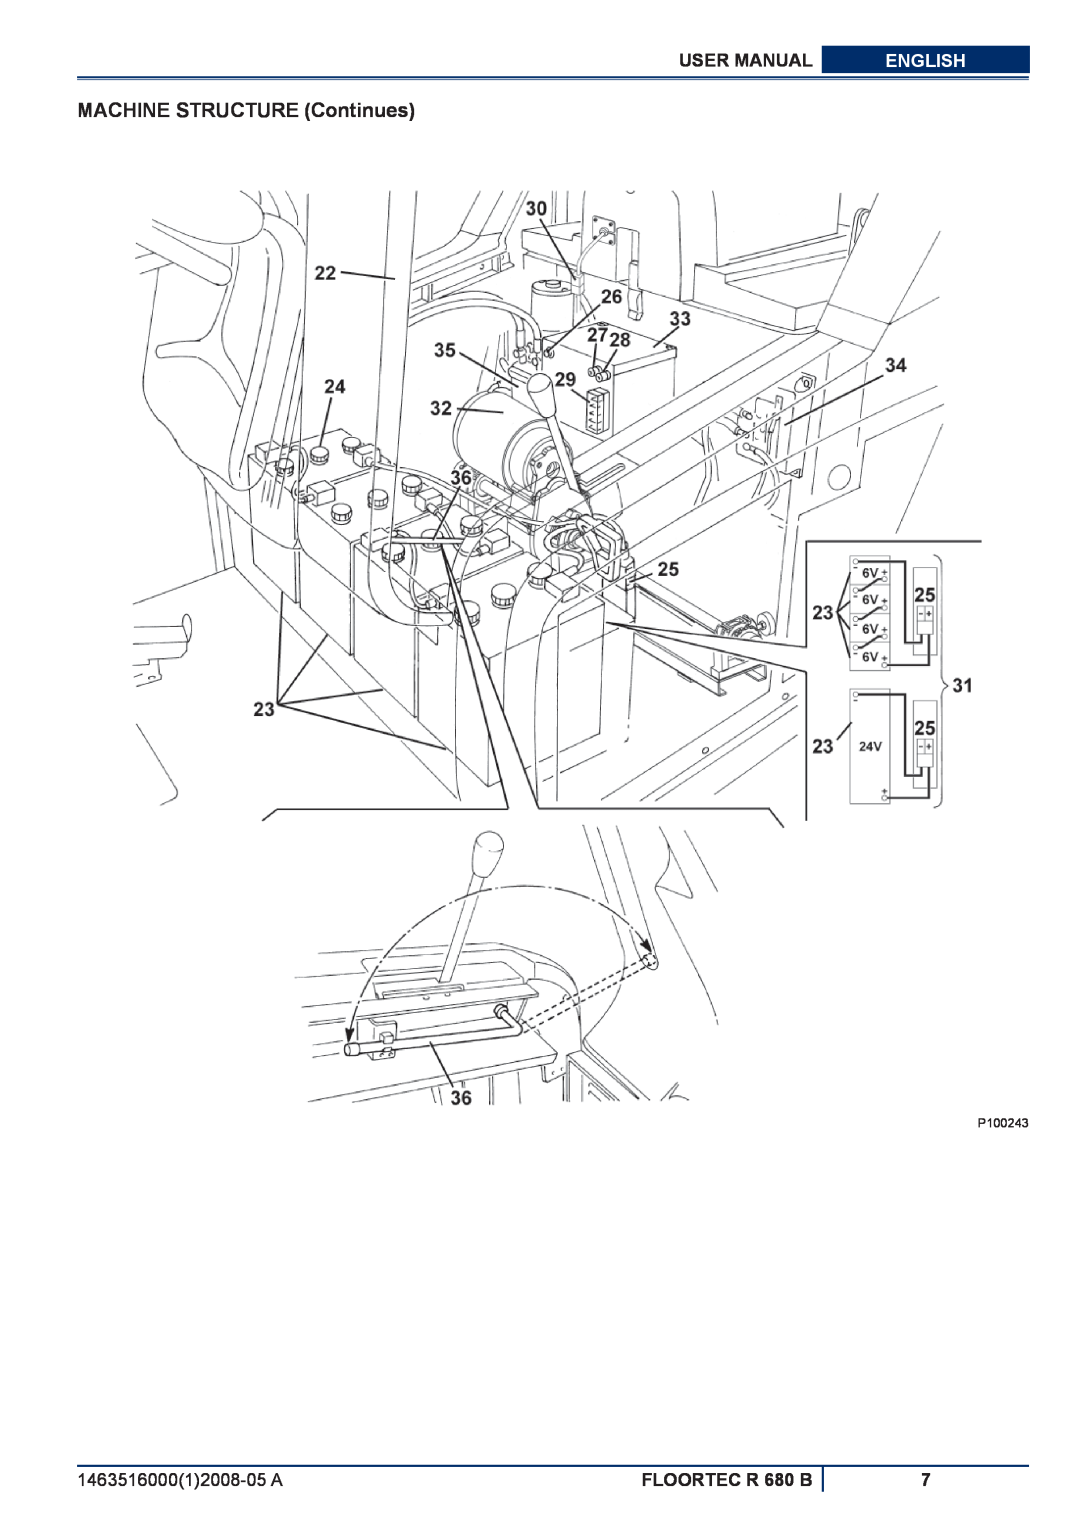 Nilfisk-ALTO manuel dutilisation MACHINE STRUCTURE Continues, User Manual, English, FLOORTEC R 680 B 